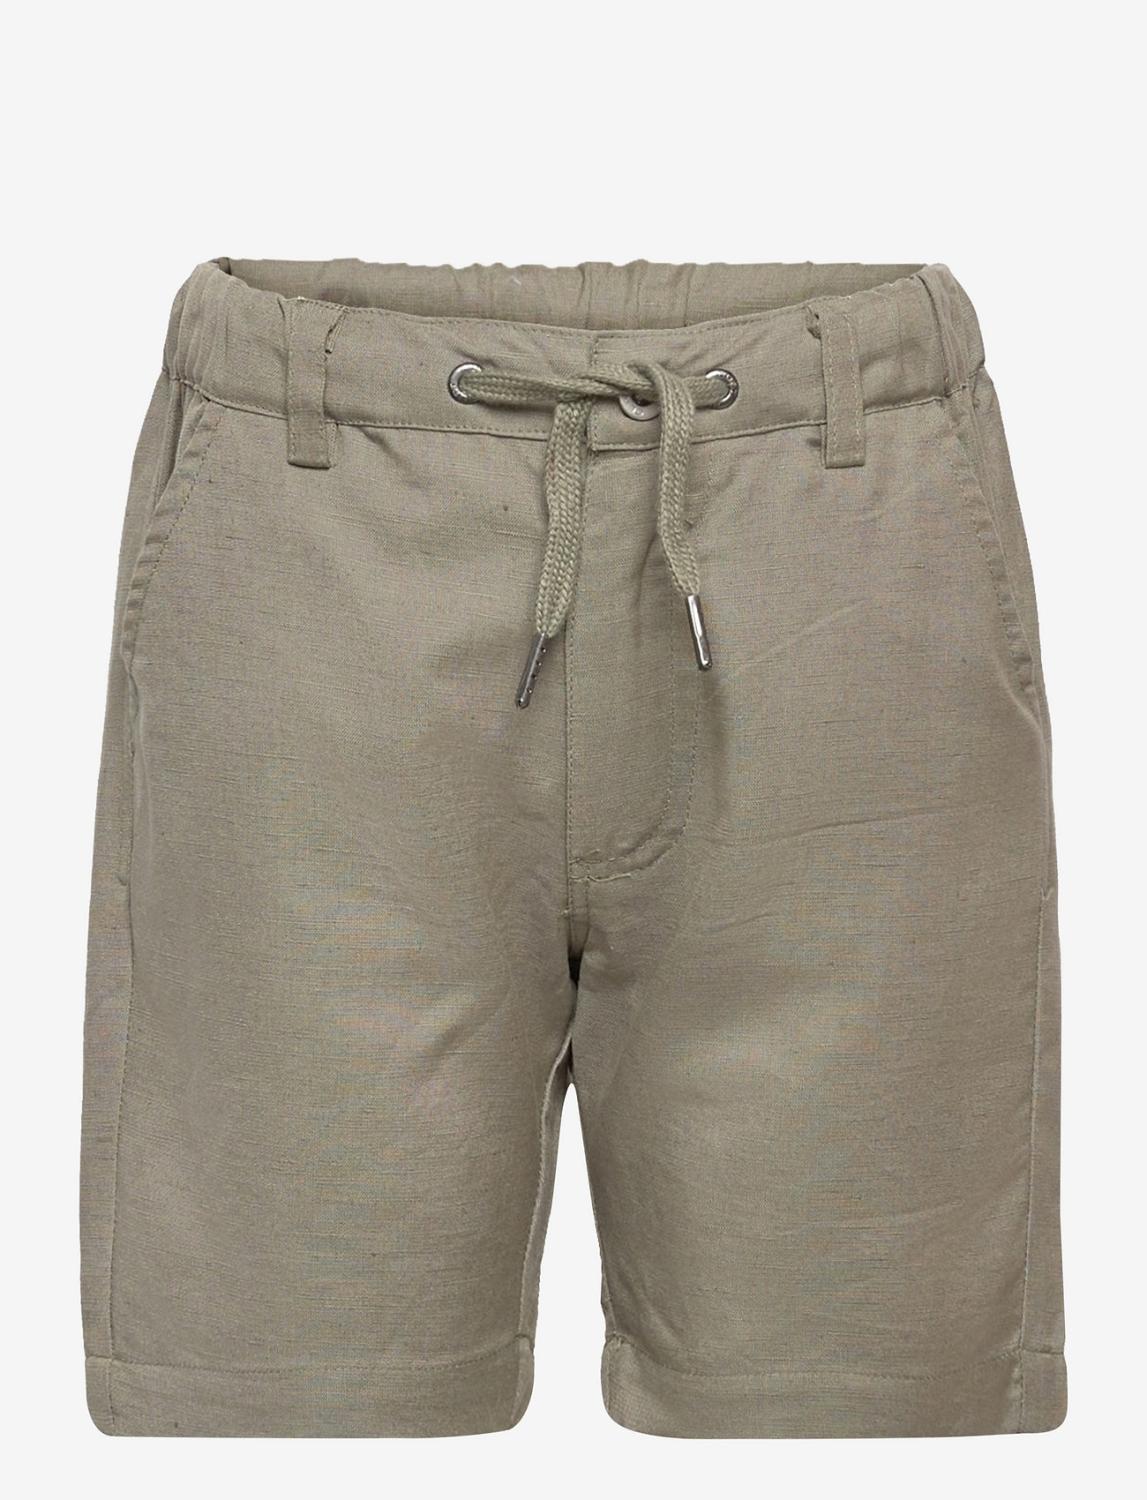 Hector shorts